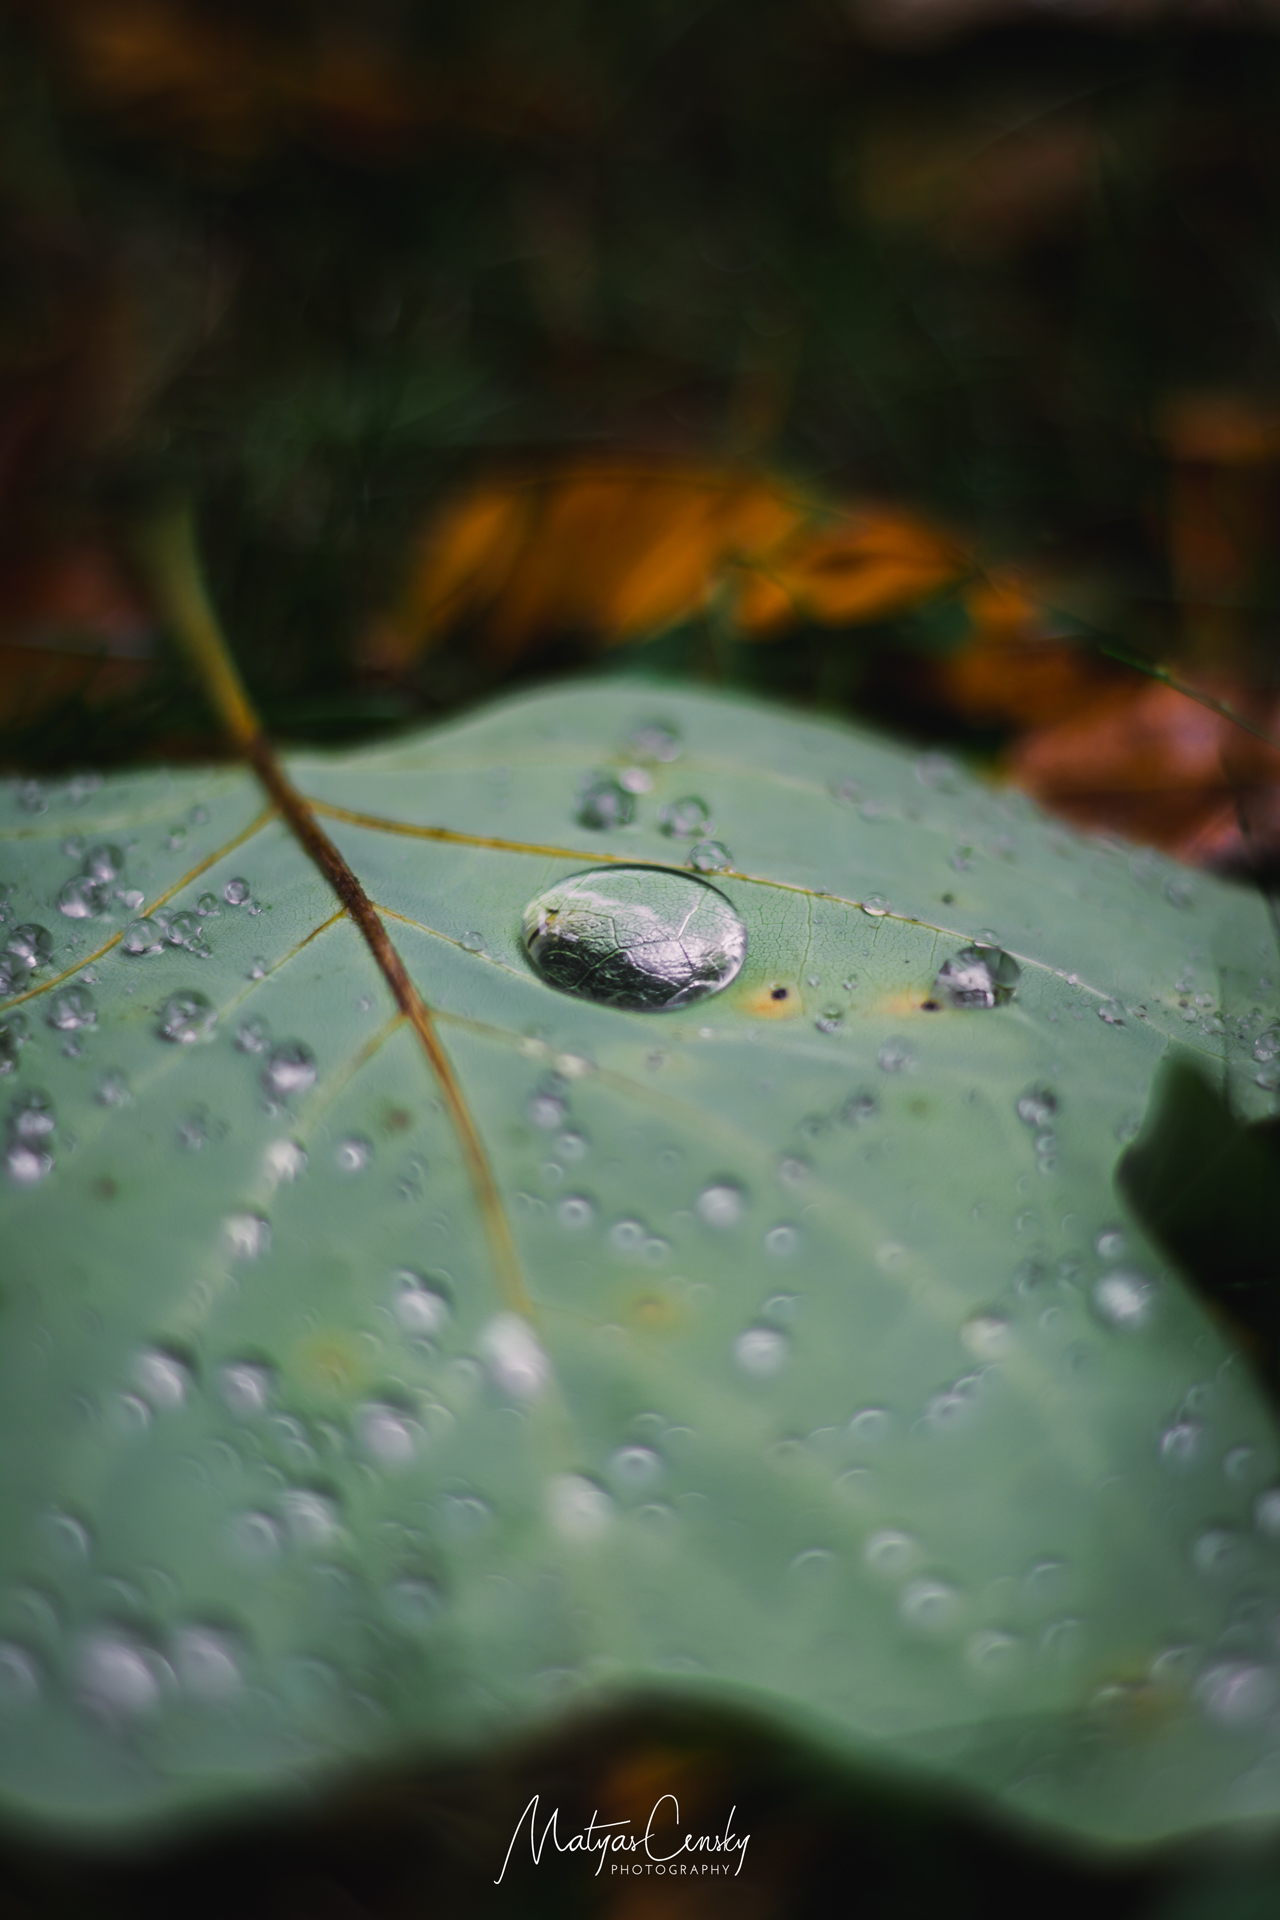 Close photo of a raindrop on a leaf.